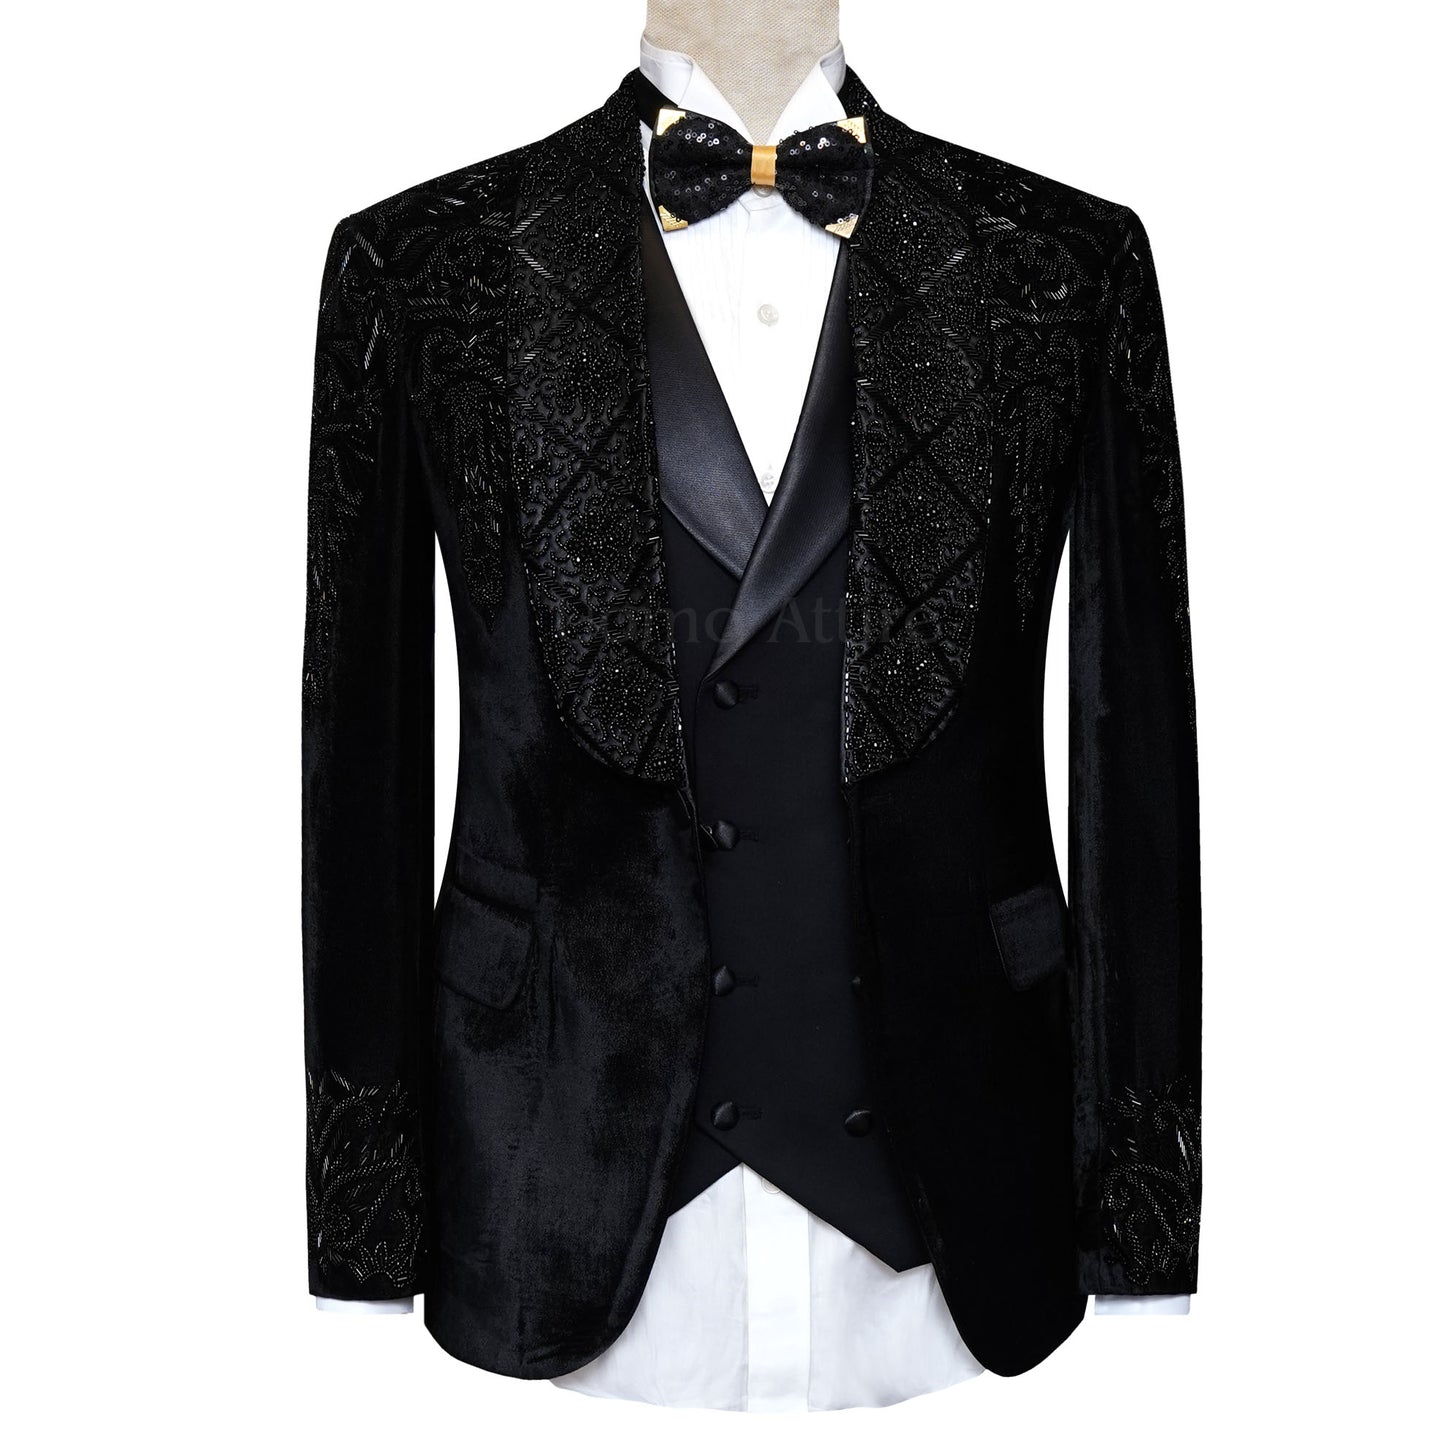 Men's Luxury Bespoke Embellished Black Velvet Tuxedo 3 Piece Suit